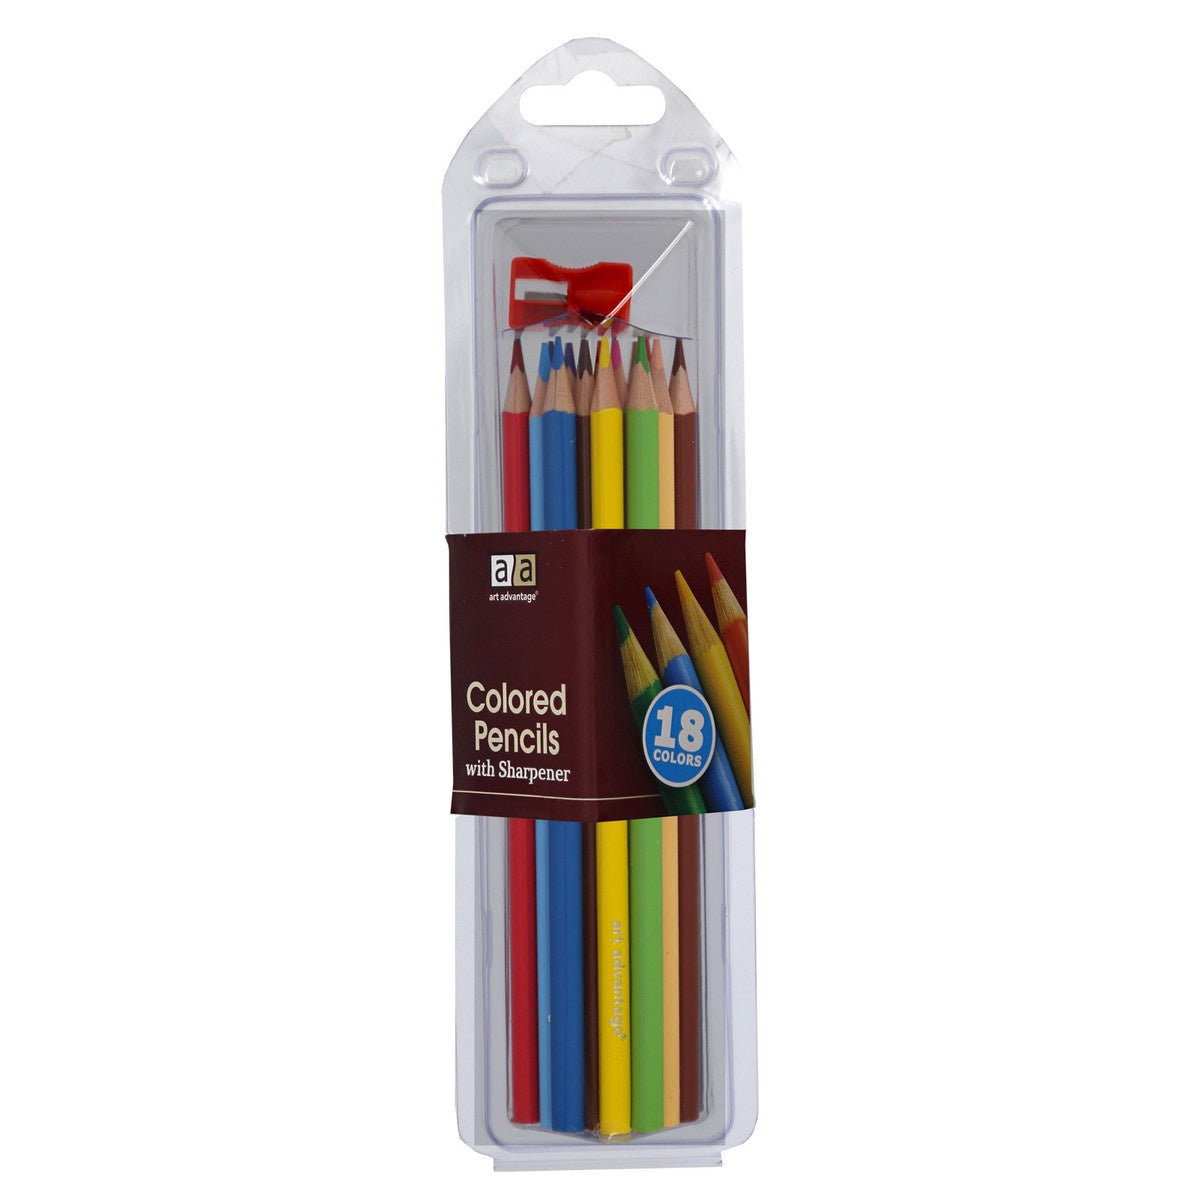 Coloring Books & Colored Pencils